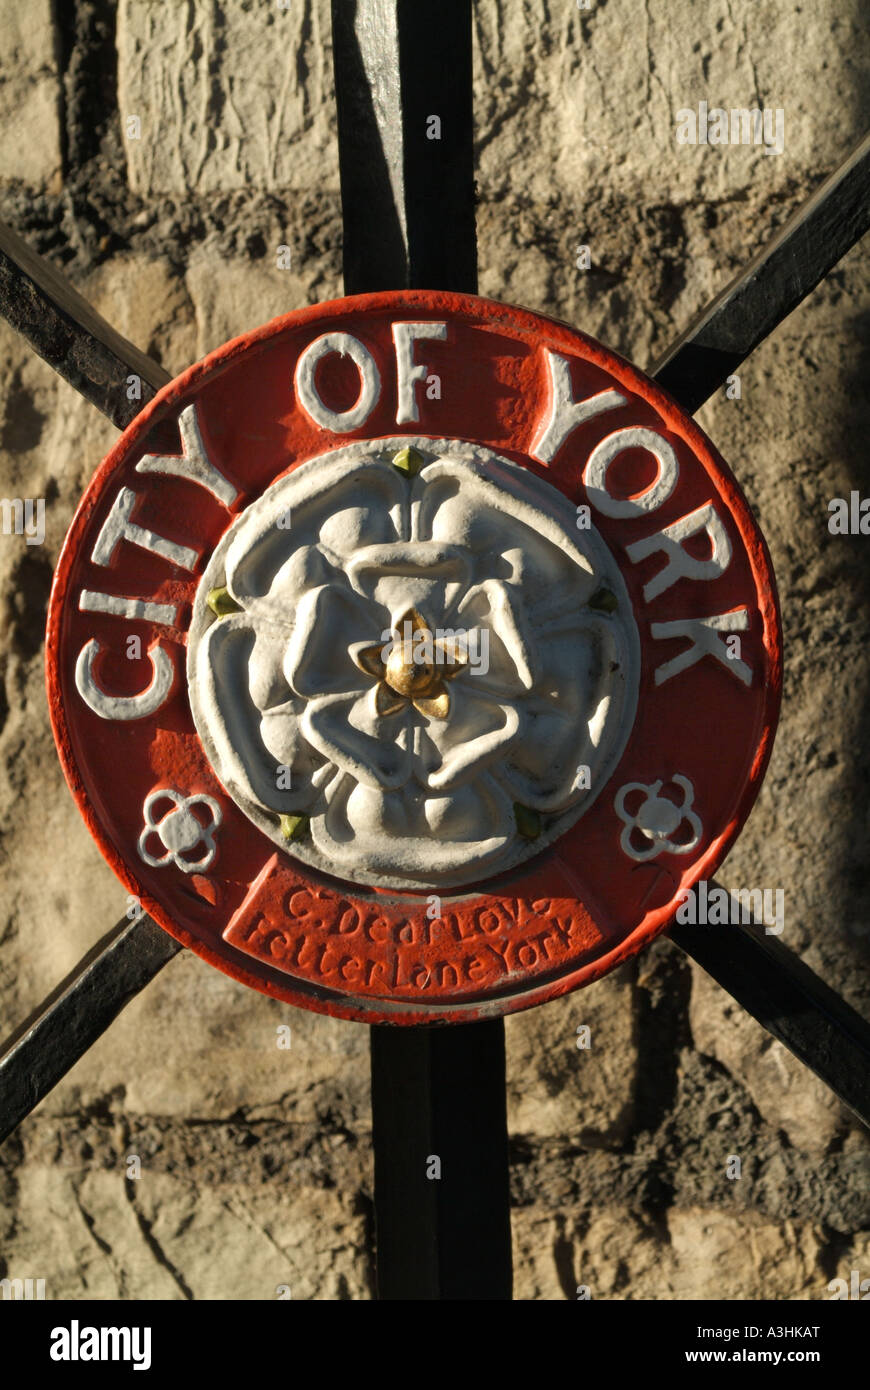 City of York badge. Stock Photo